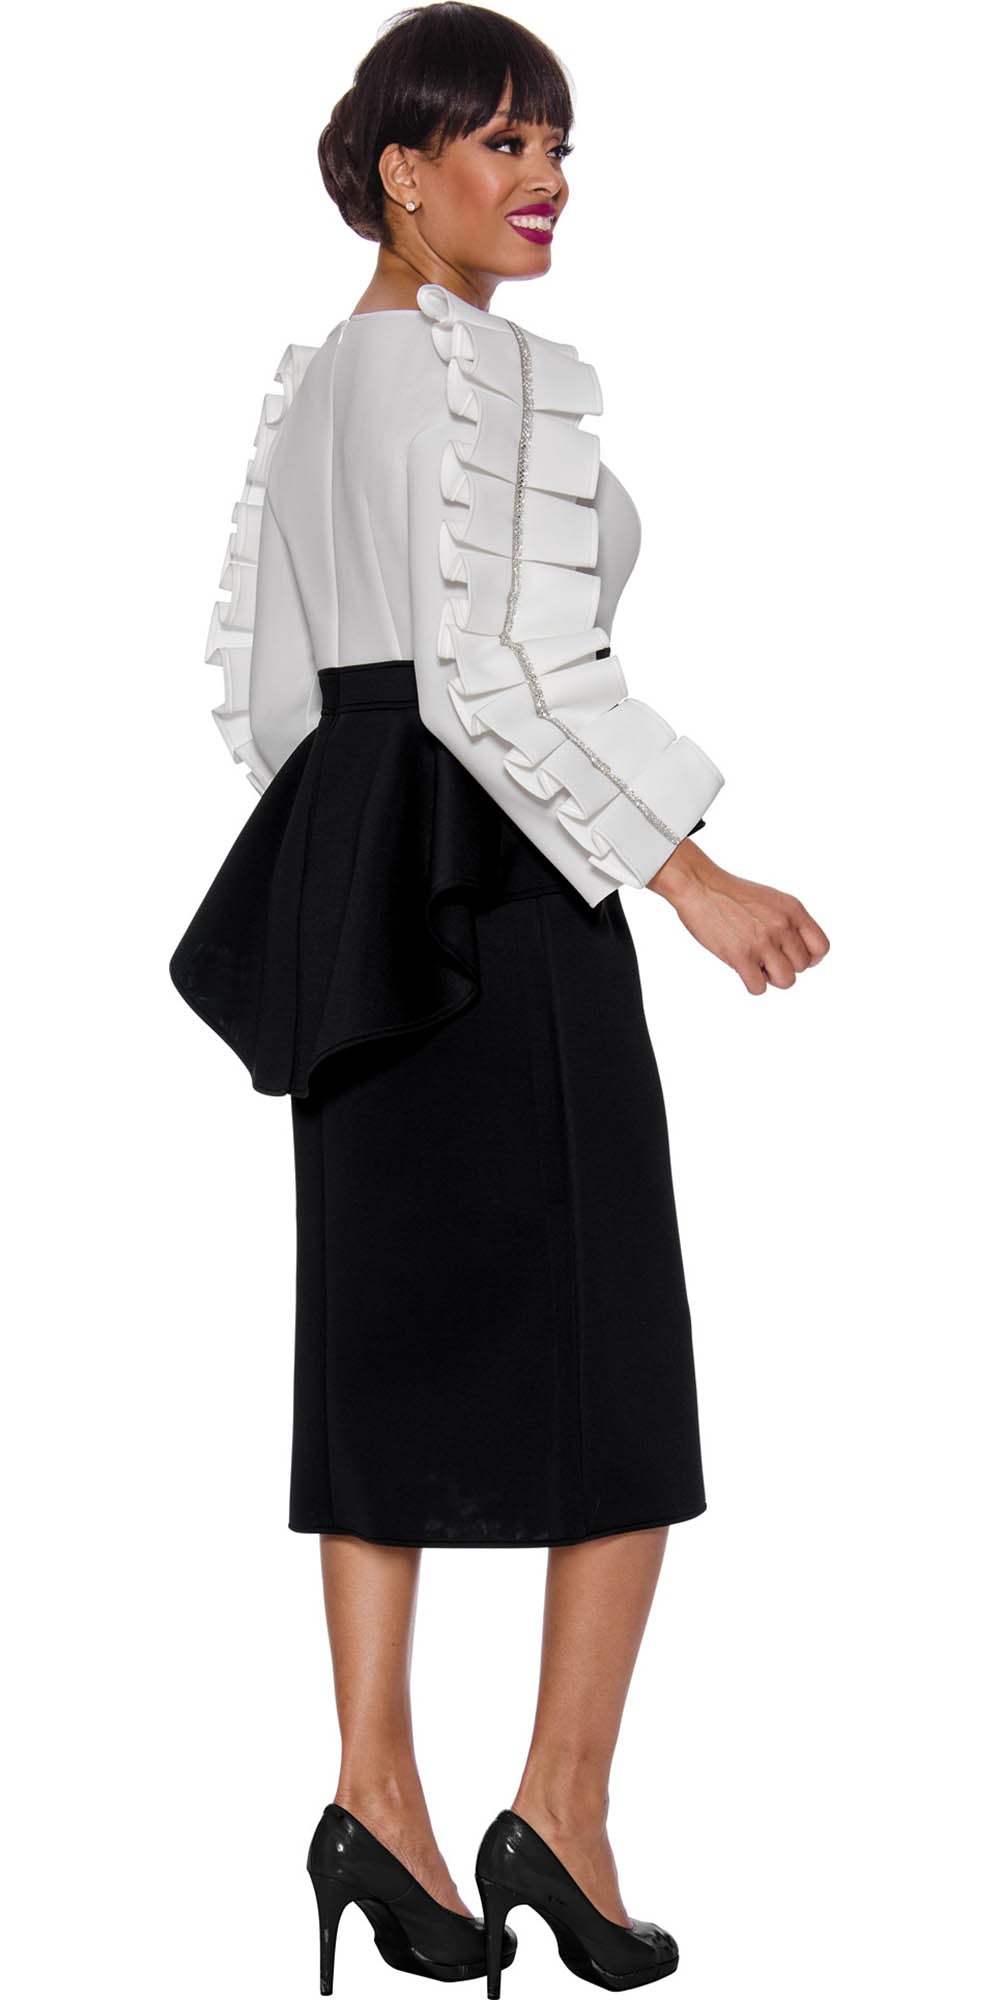 Stellar Looks - 1771 - Black White Two-tone Scuba Dress